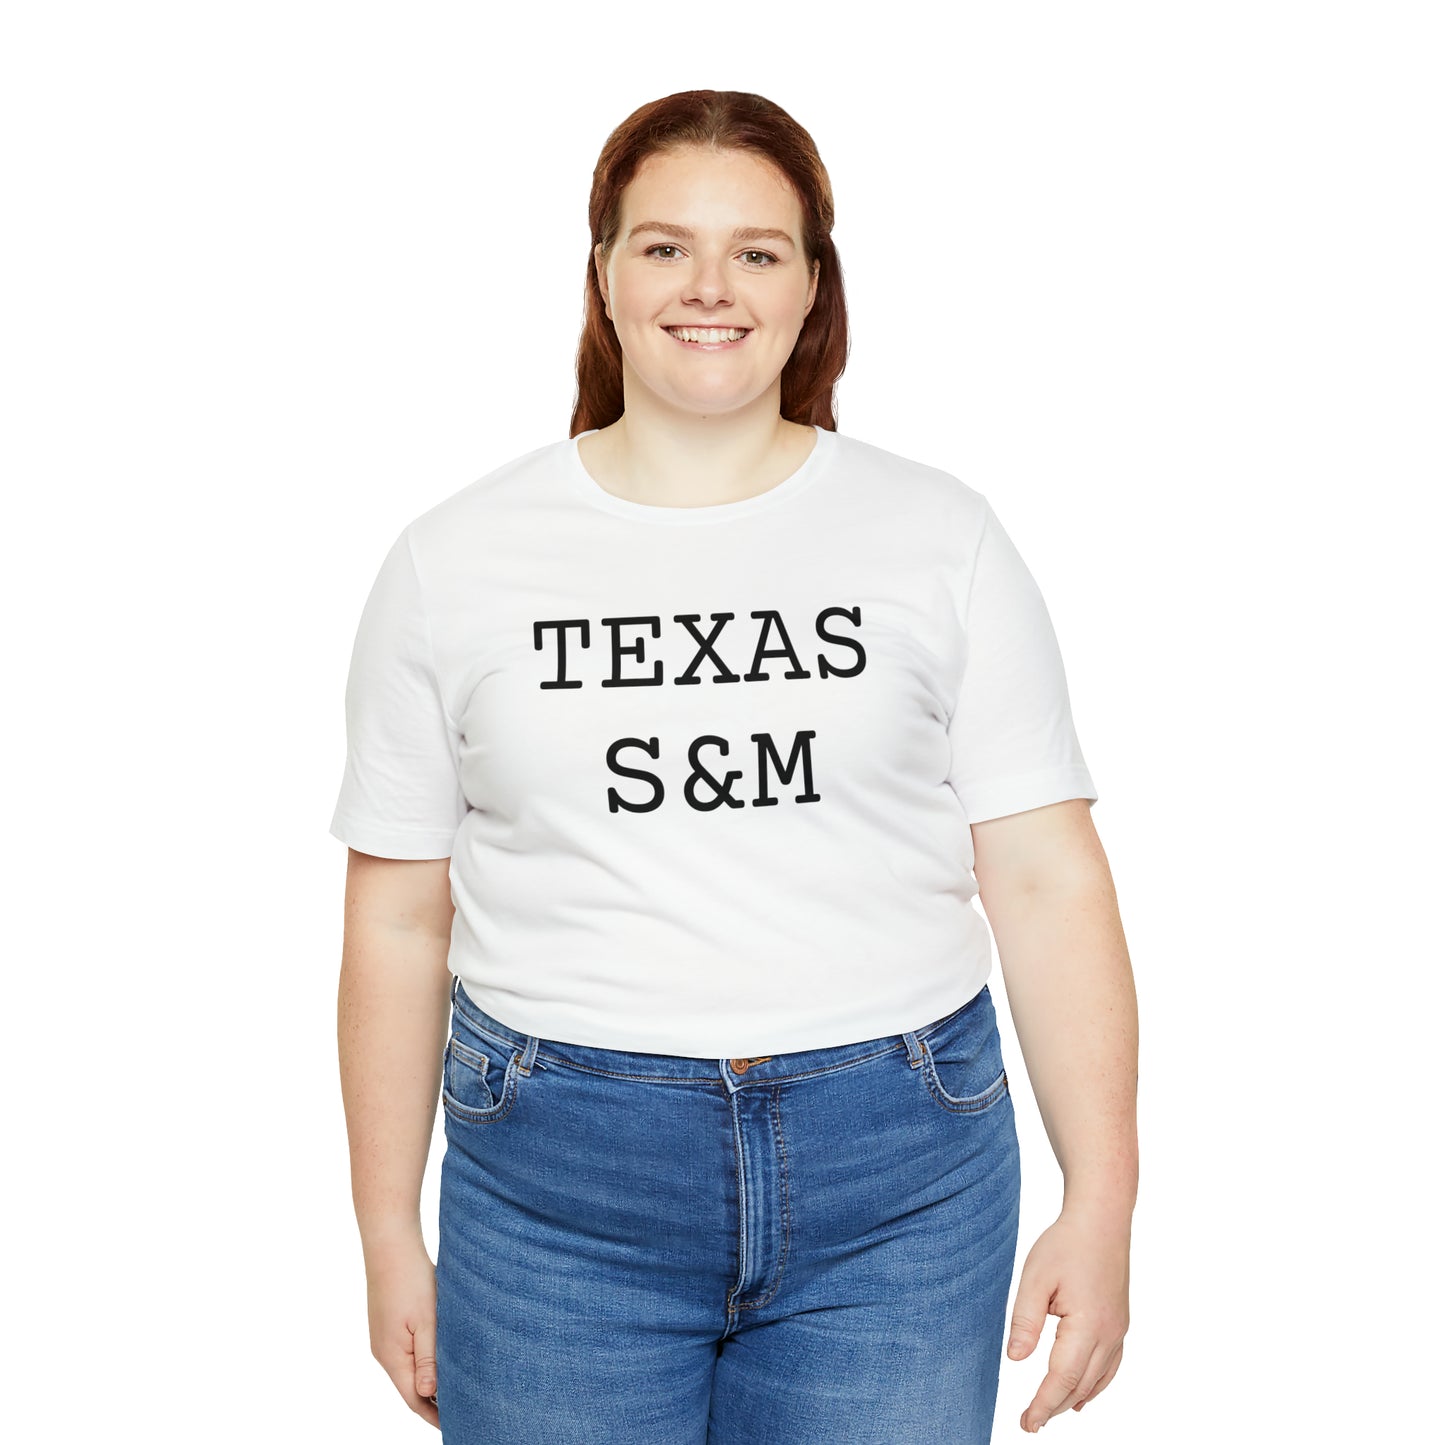 TEXAS S&M - Hurts Shirts